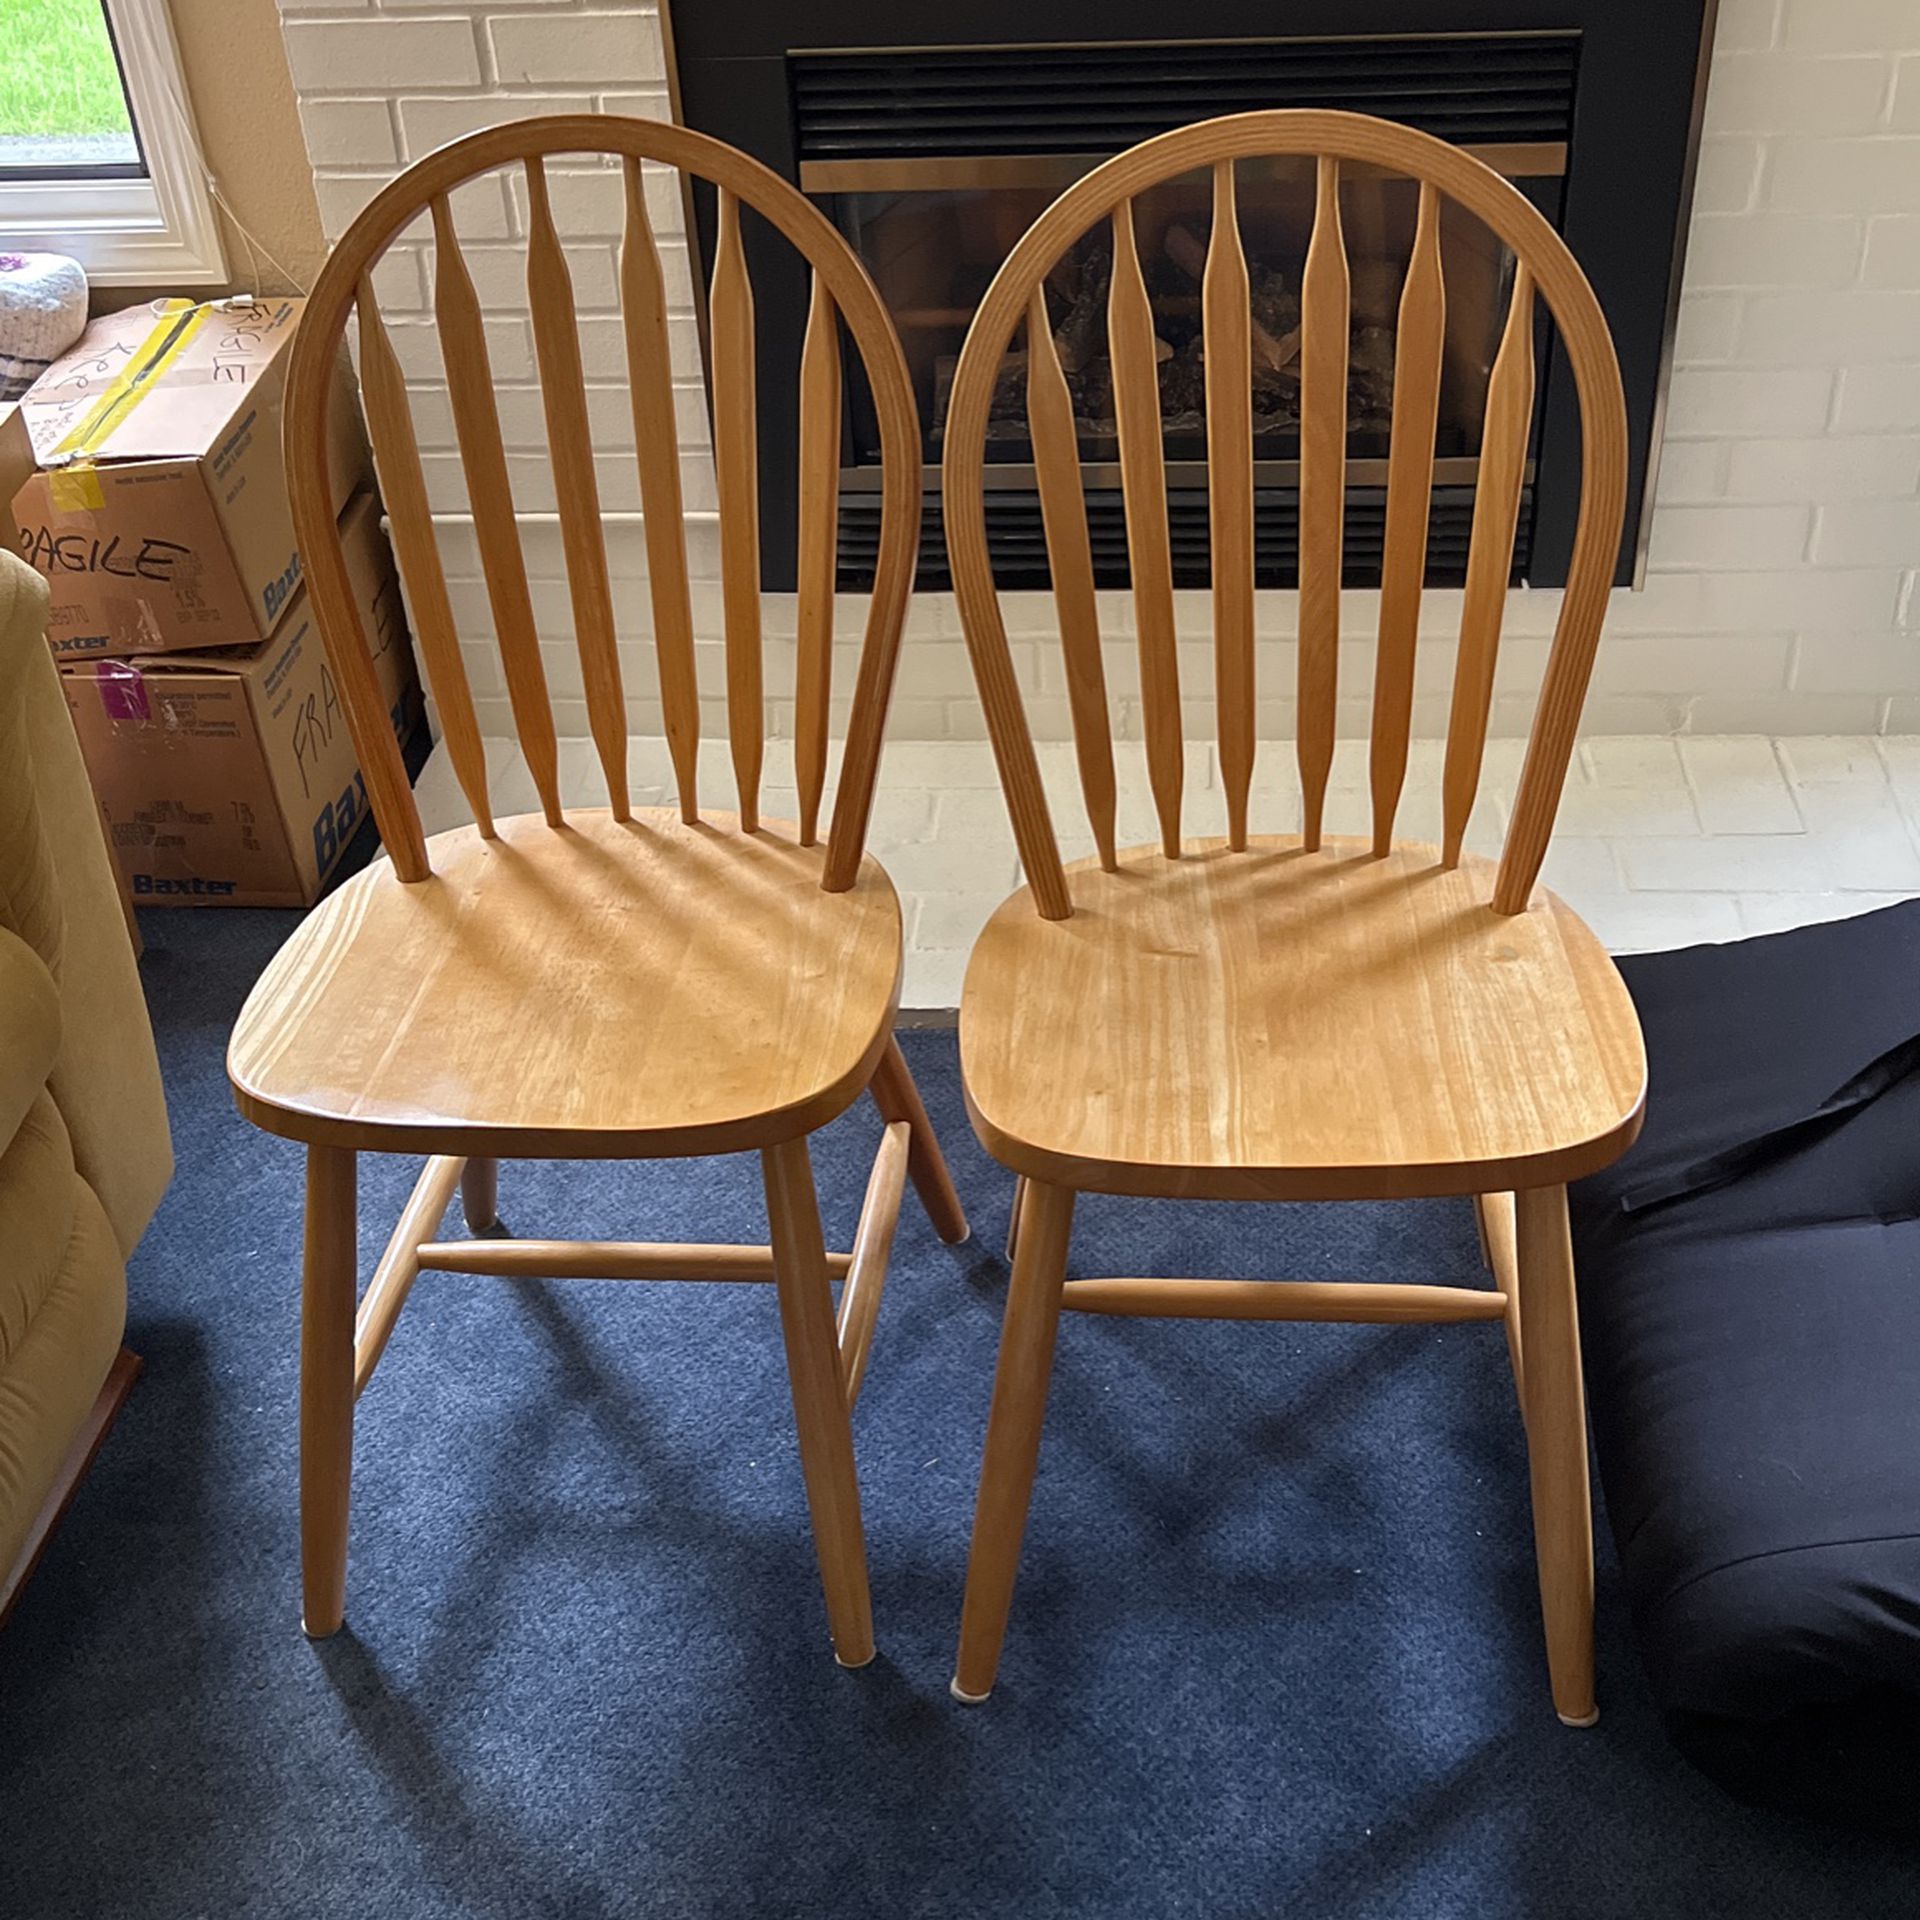 2  Wood Chairs $25